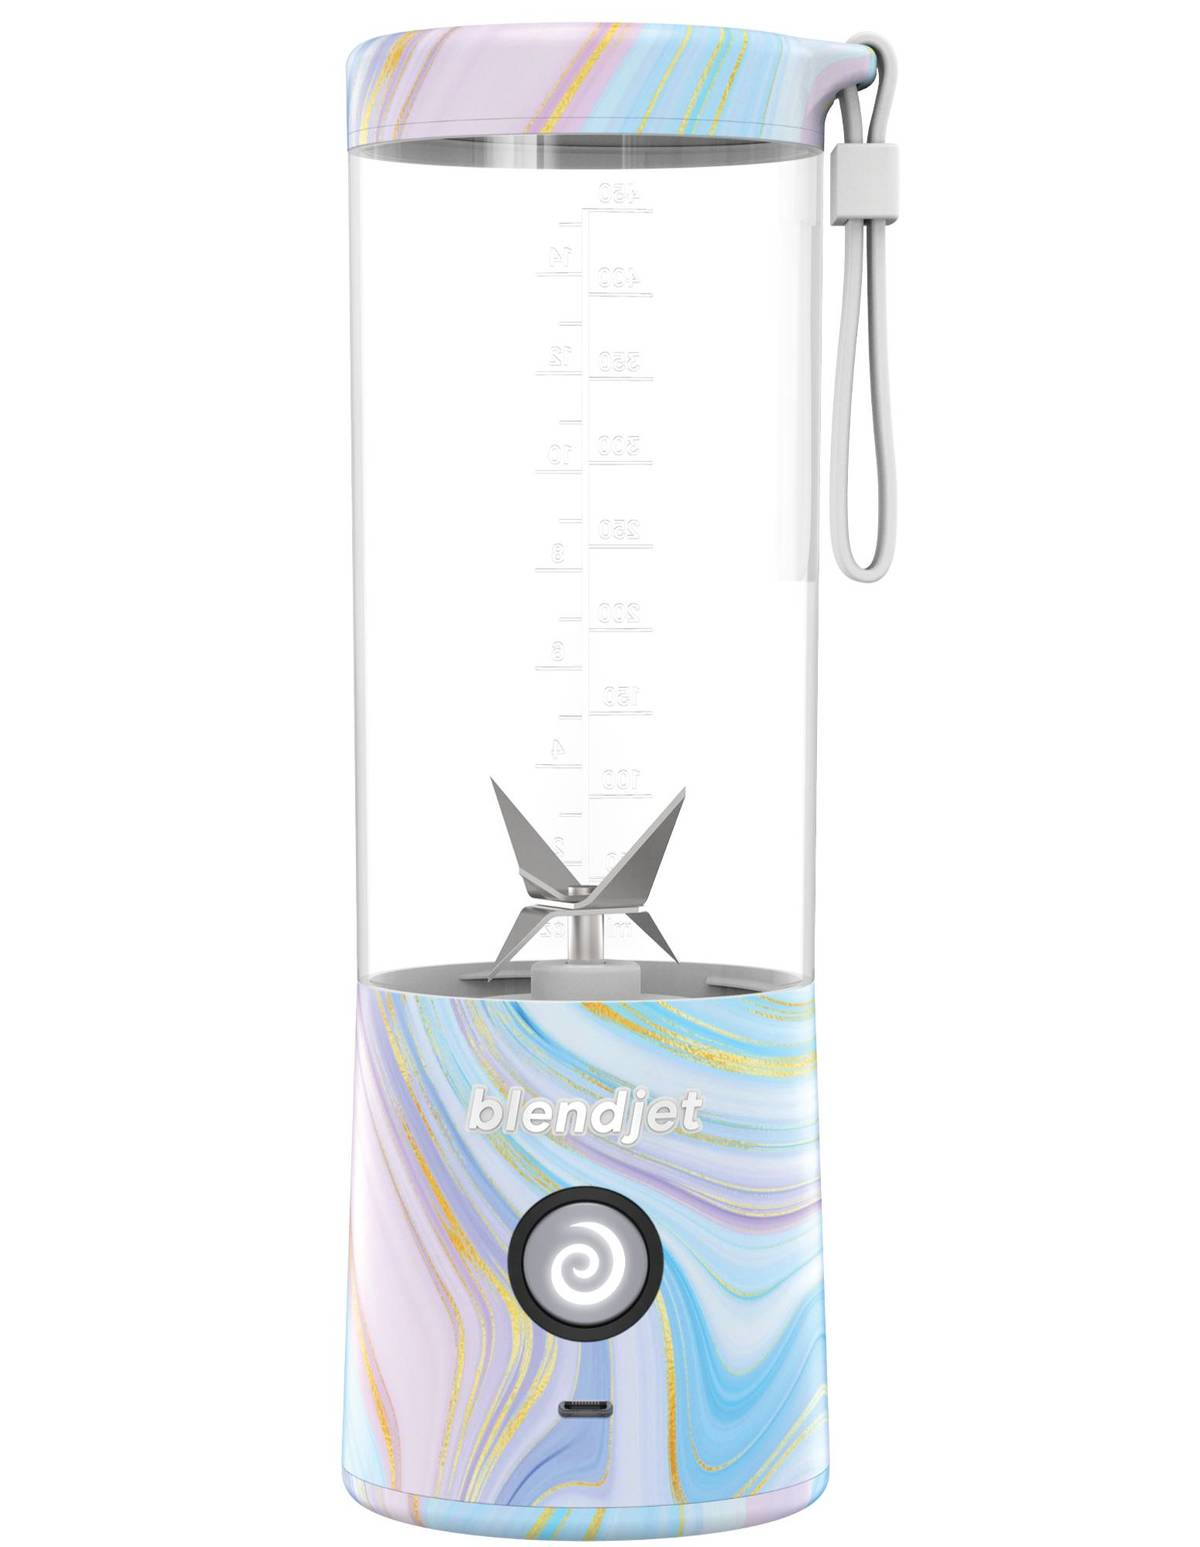 BLENDJET 2 Portable Blender - (5 Geode Geode Mixer Volt)